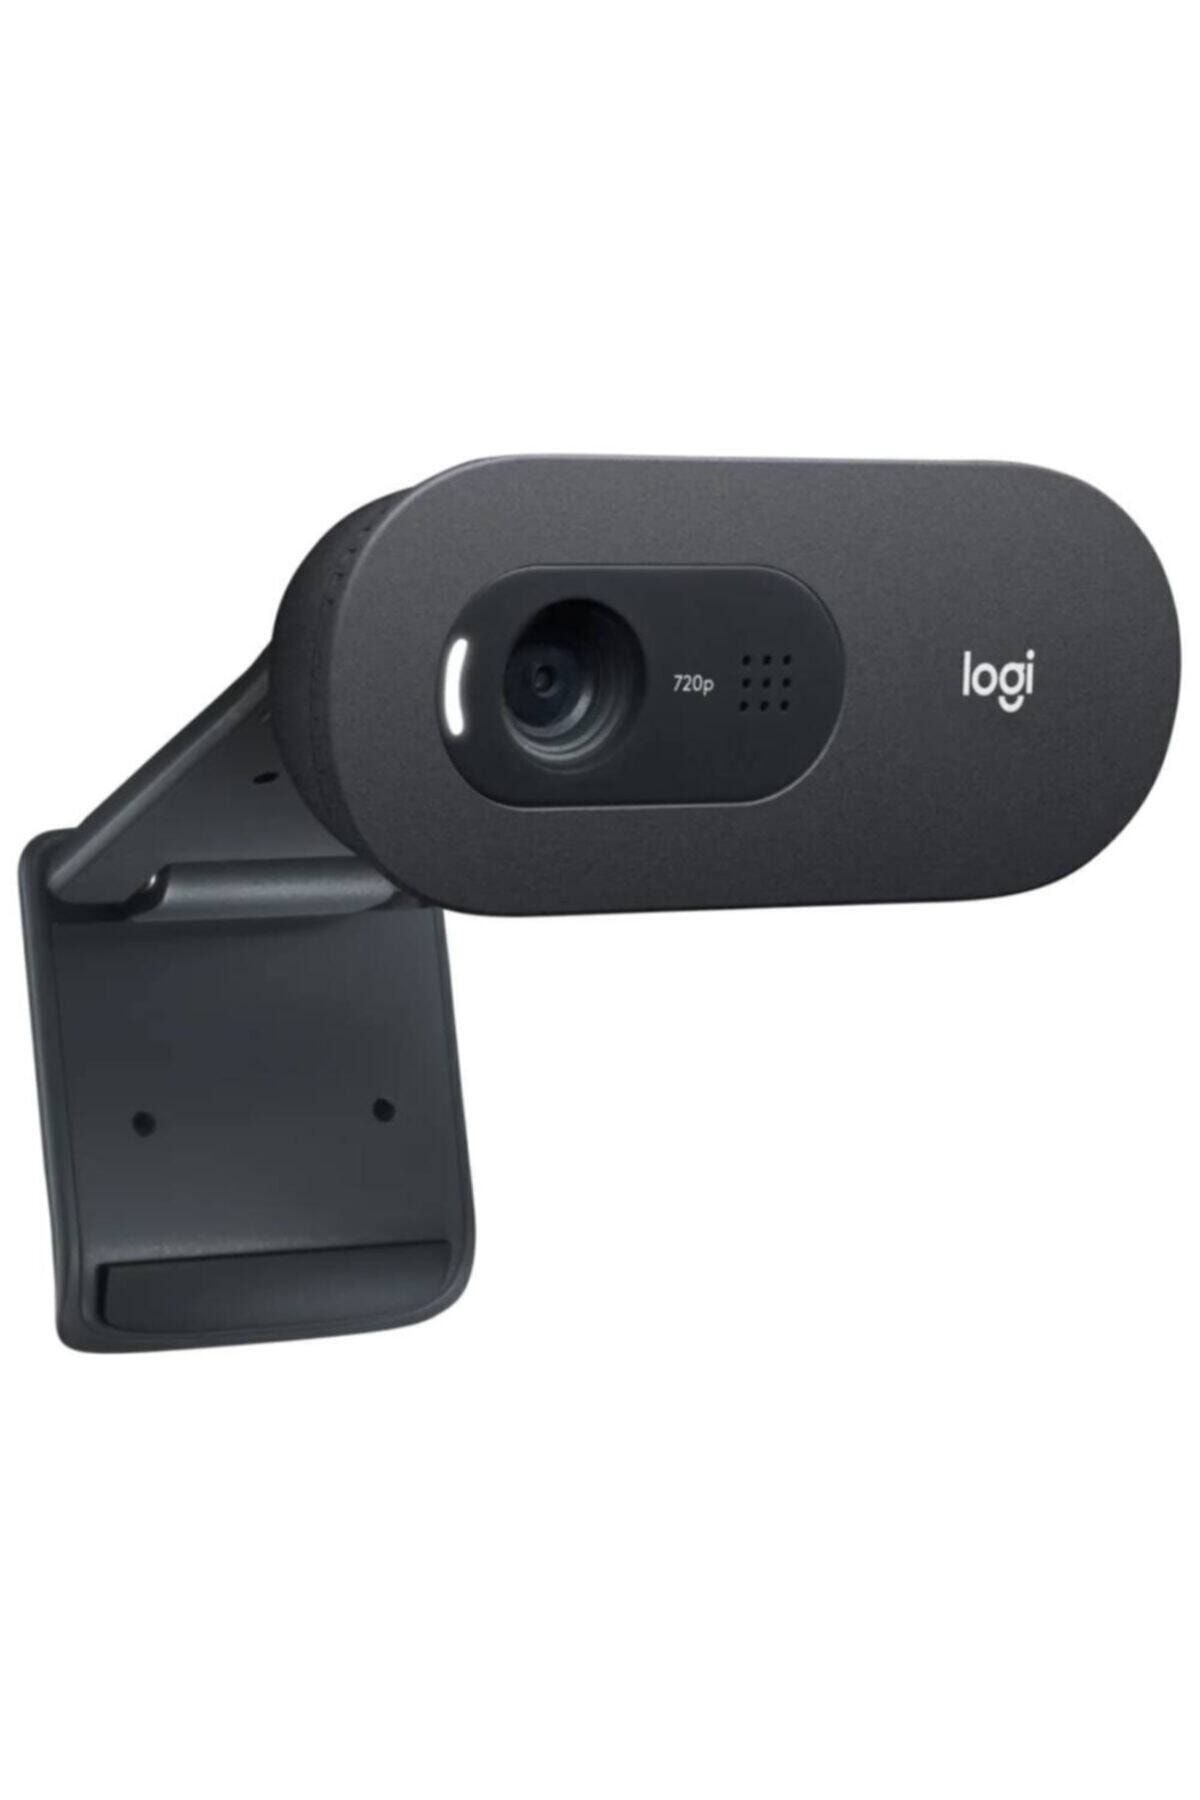 logitech C505e Hd Business Webcam